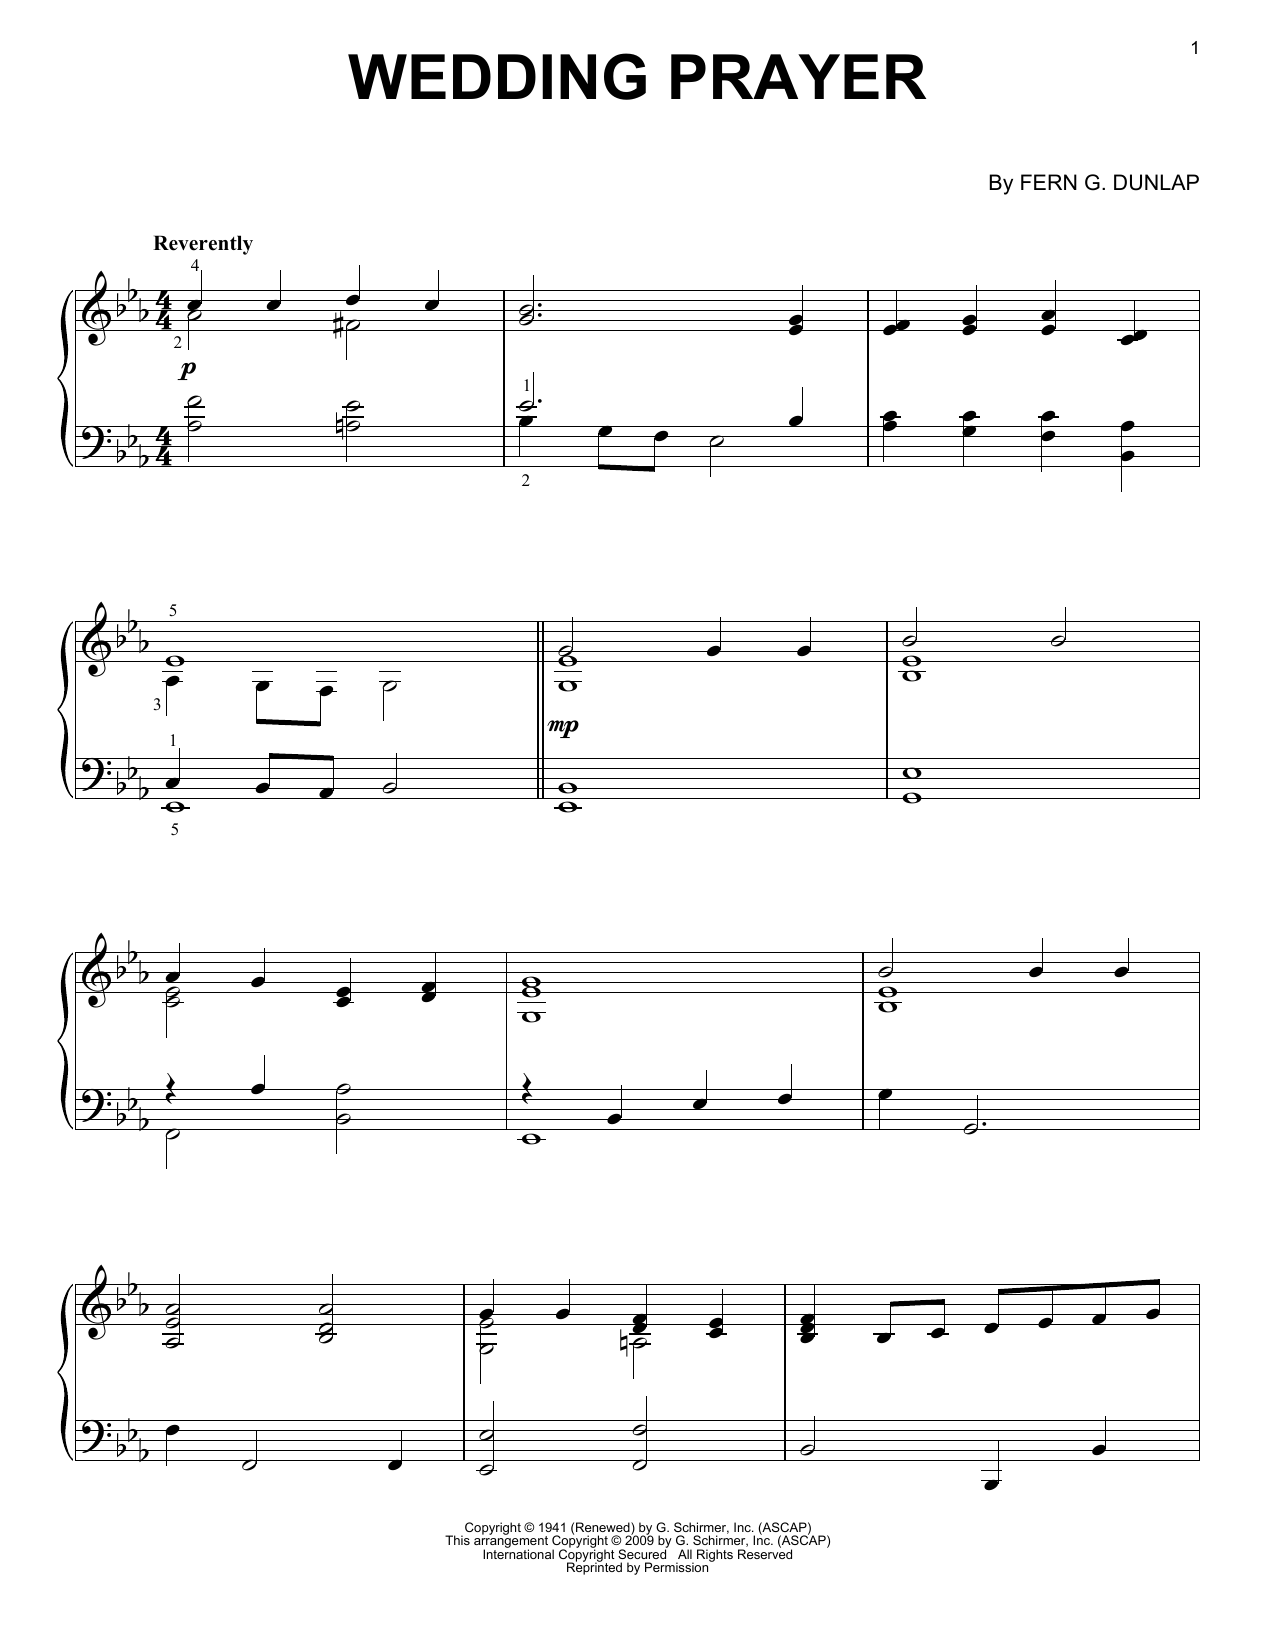 John Waller Wedding Prayer Sheet Music Notes & Chords for Piano - Download or Print PDF